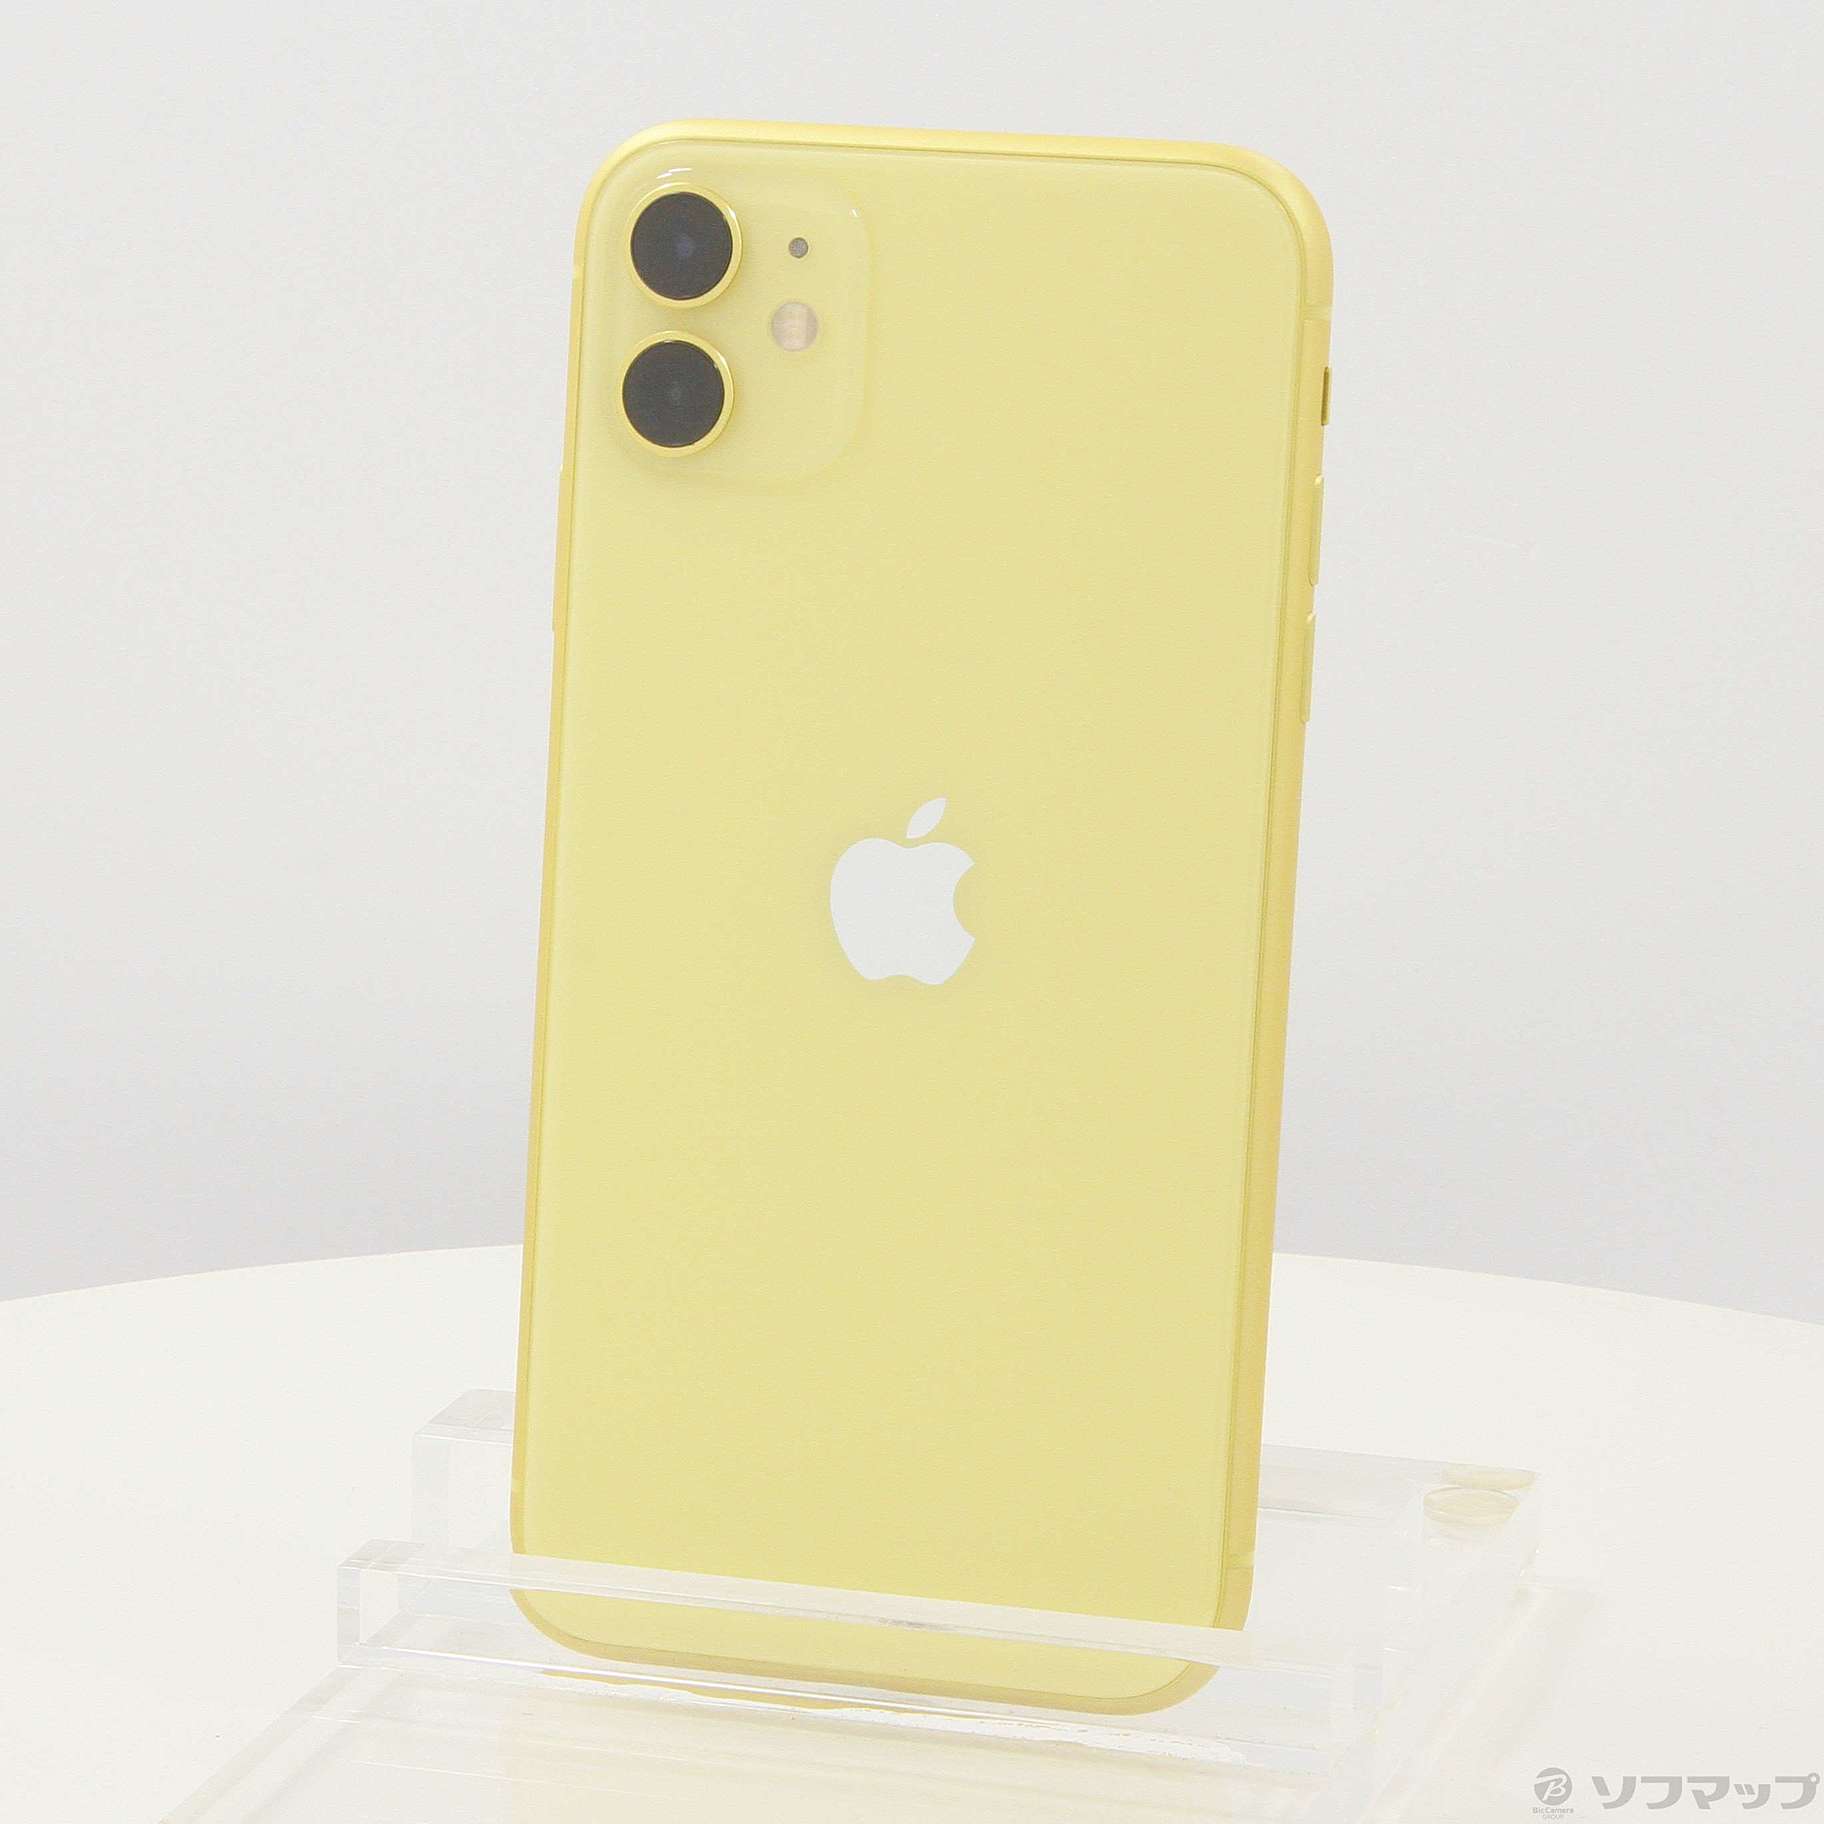 Apple iPhone11 イエロー 64GB SIMフリー - スマートフォン本体